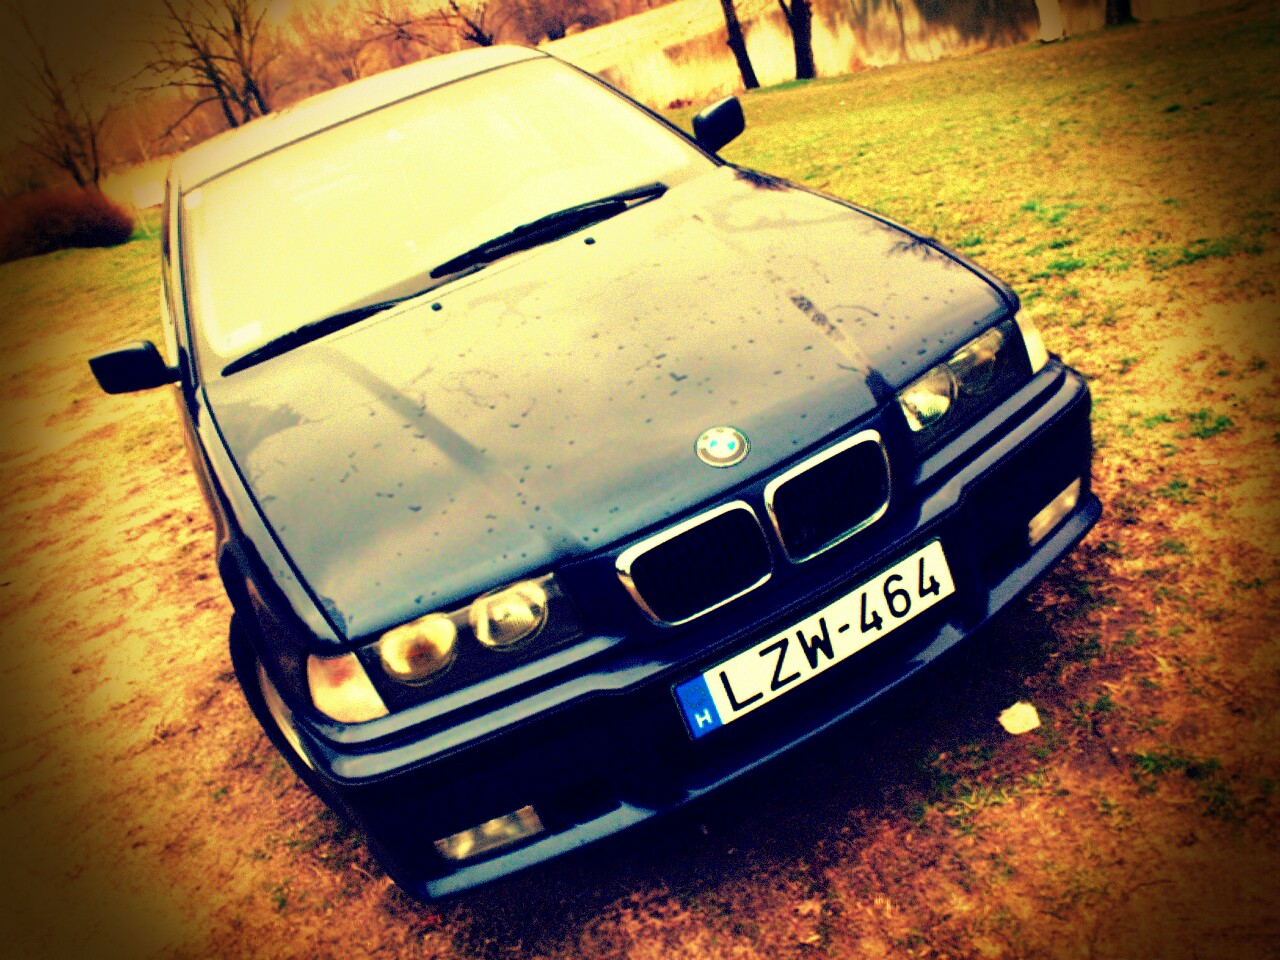 BMW 318tds